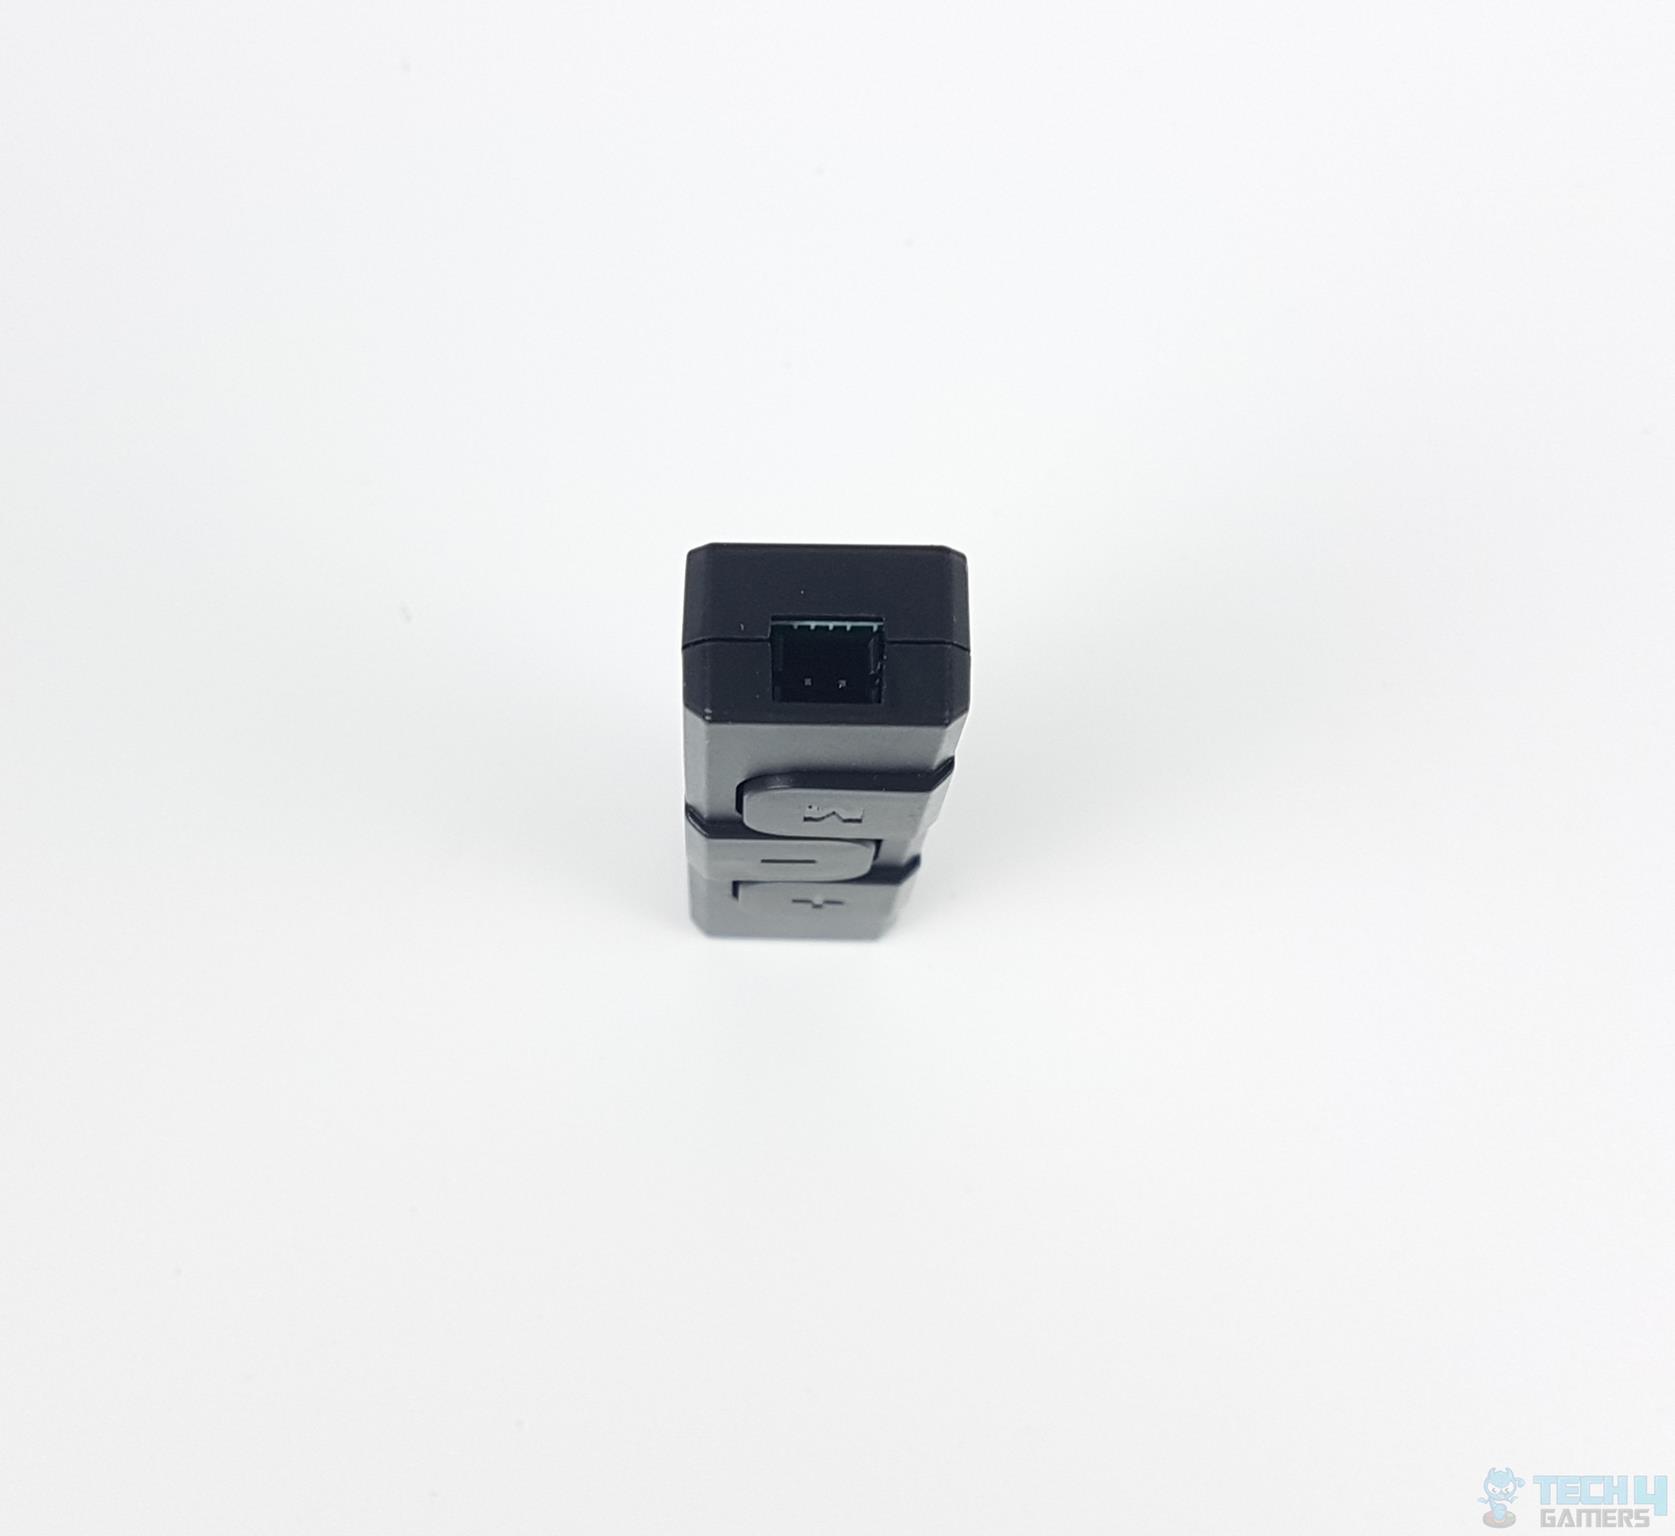 SilverStone iCEGEM 360 Liquid Cooler — 2-pin port on the controller